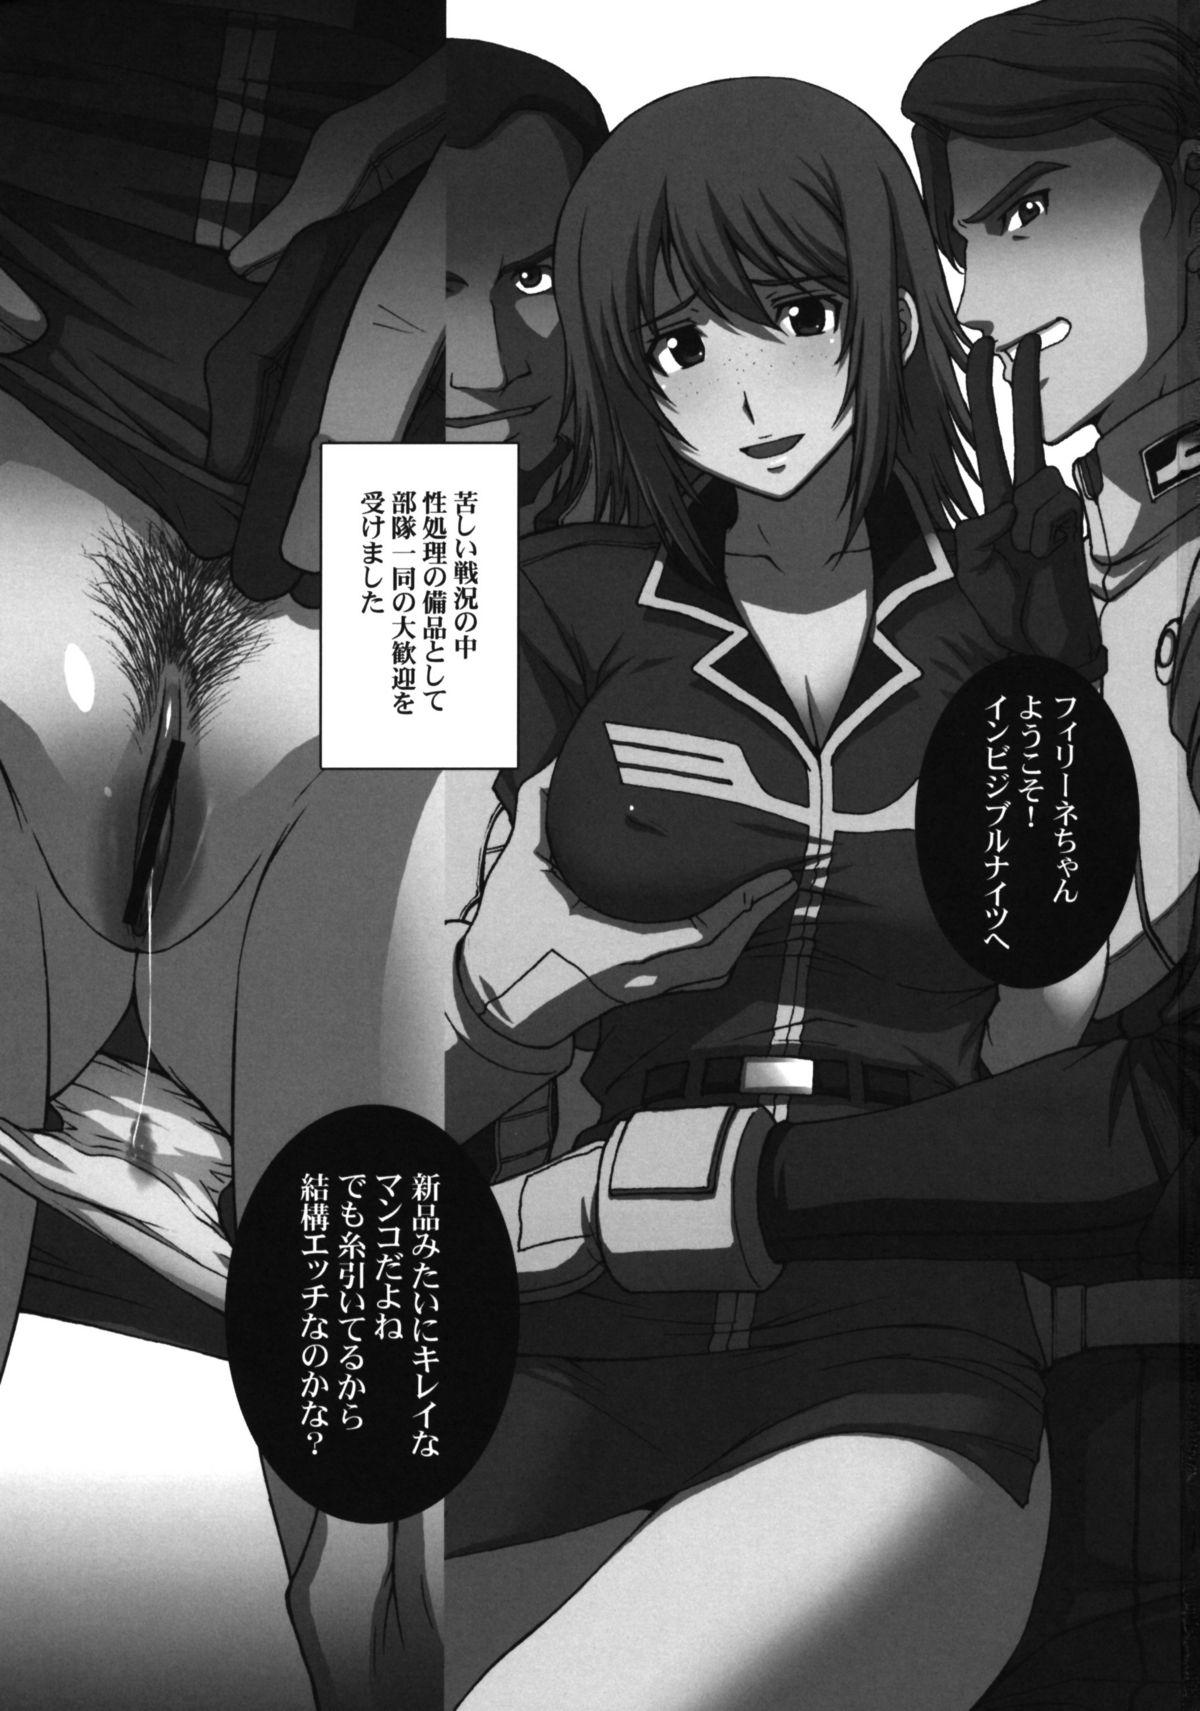 Wild ZEON LostWarChronicles "Invisible Knights no Nichijou" & "Elran Kanraku." - Gundam Mobile suit gundam lost war chronicles Ginger - Page 2